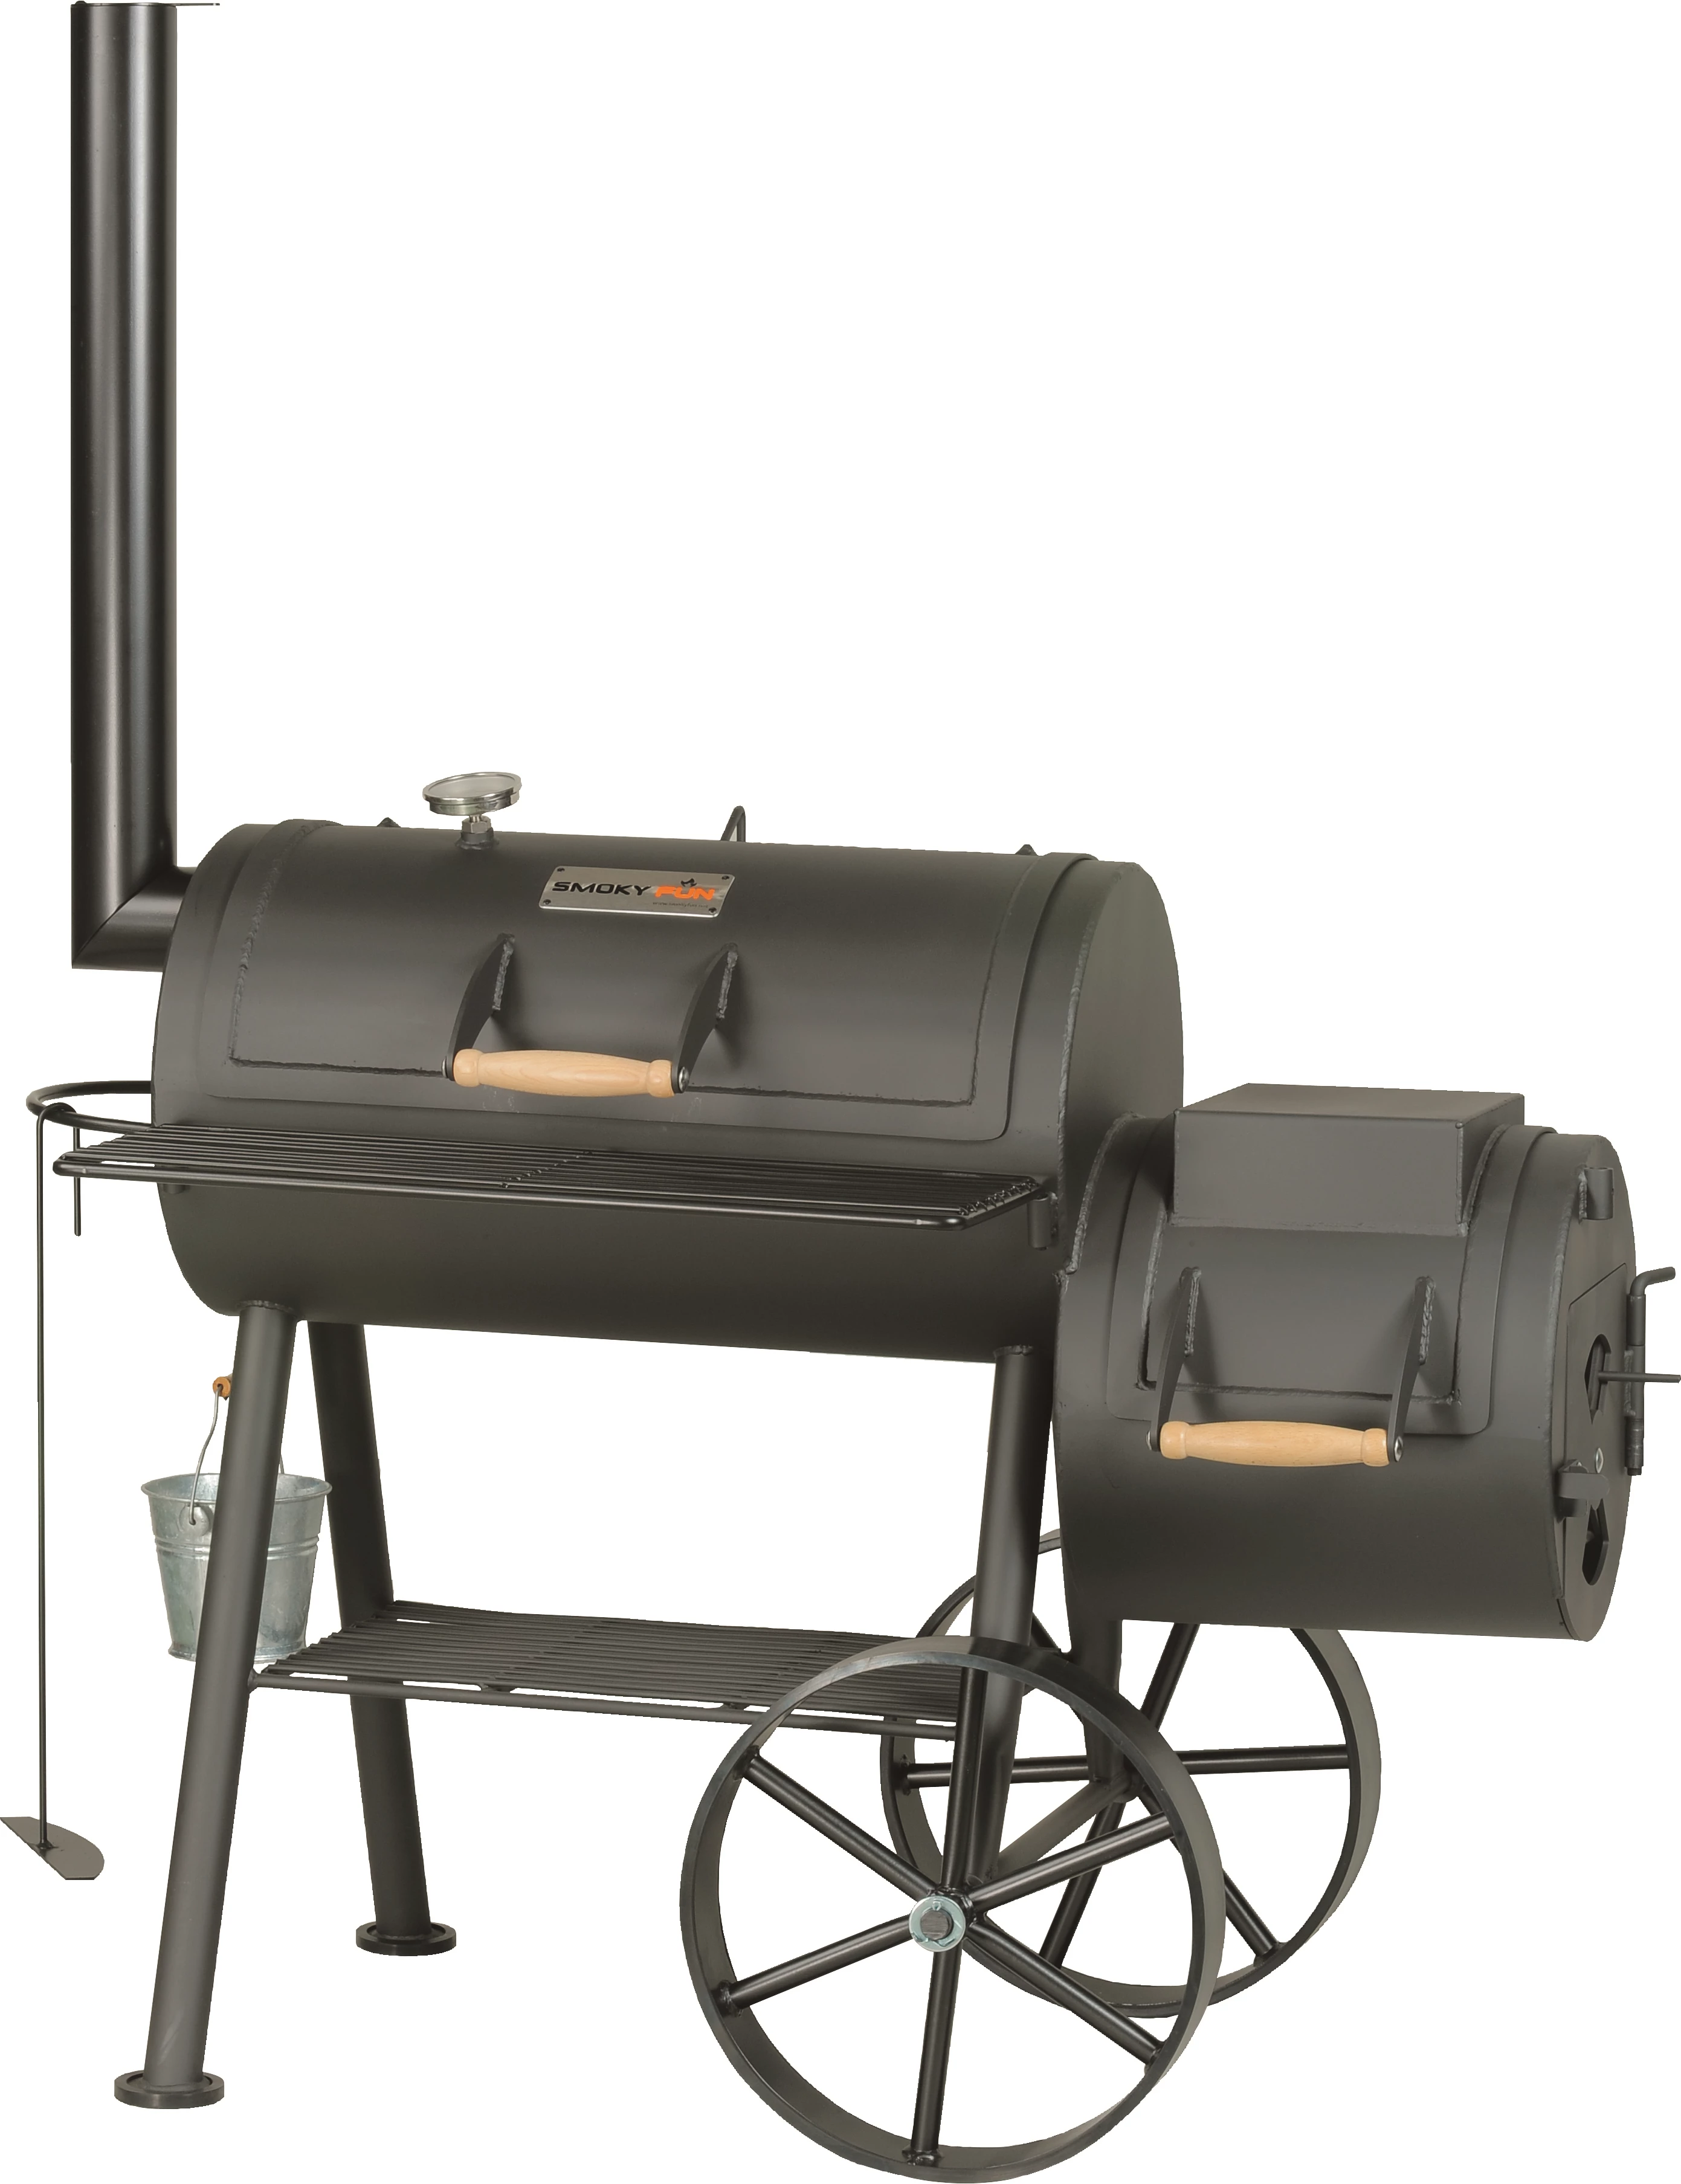 Smokyfun Offset grill